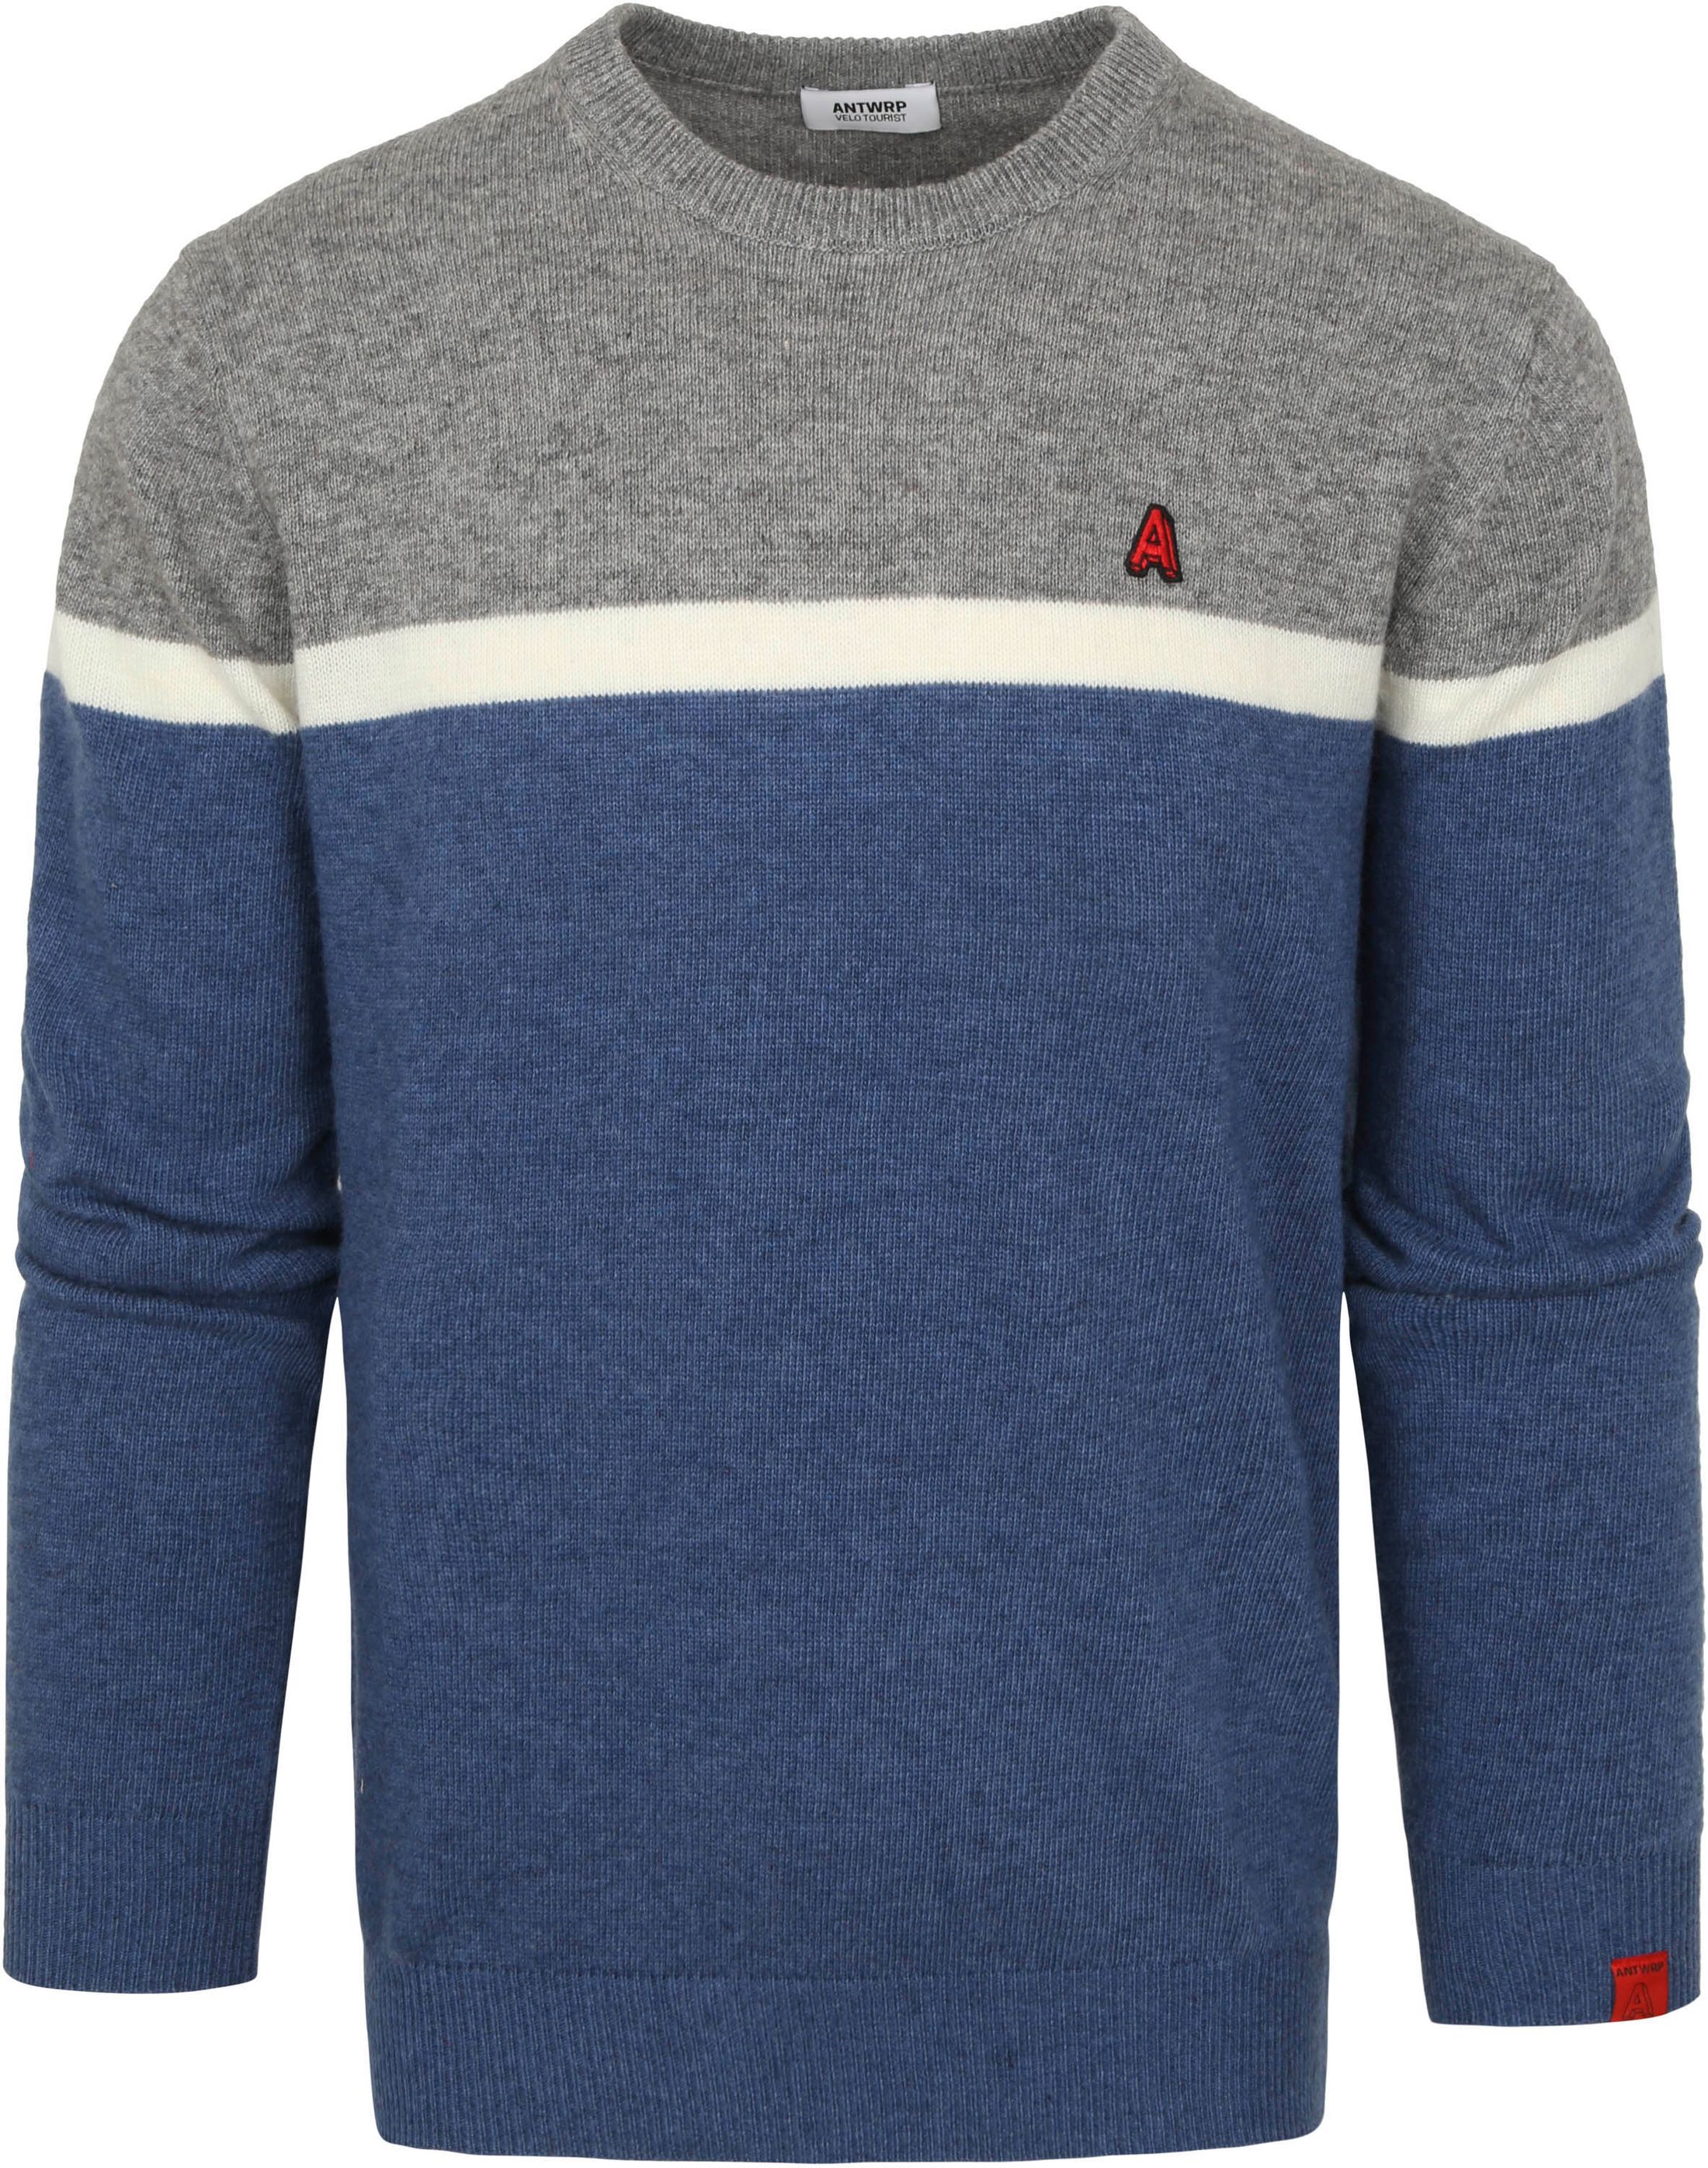 ANTWRP Sweater Mix Wool Stripe Gray Grey Blue Multicolour size L